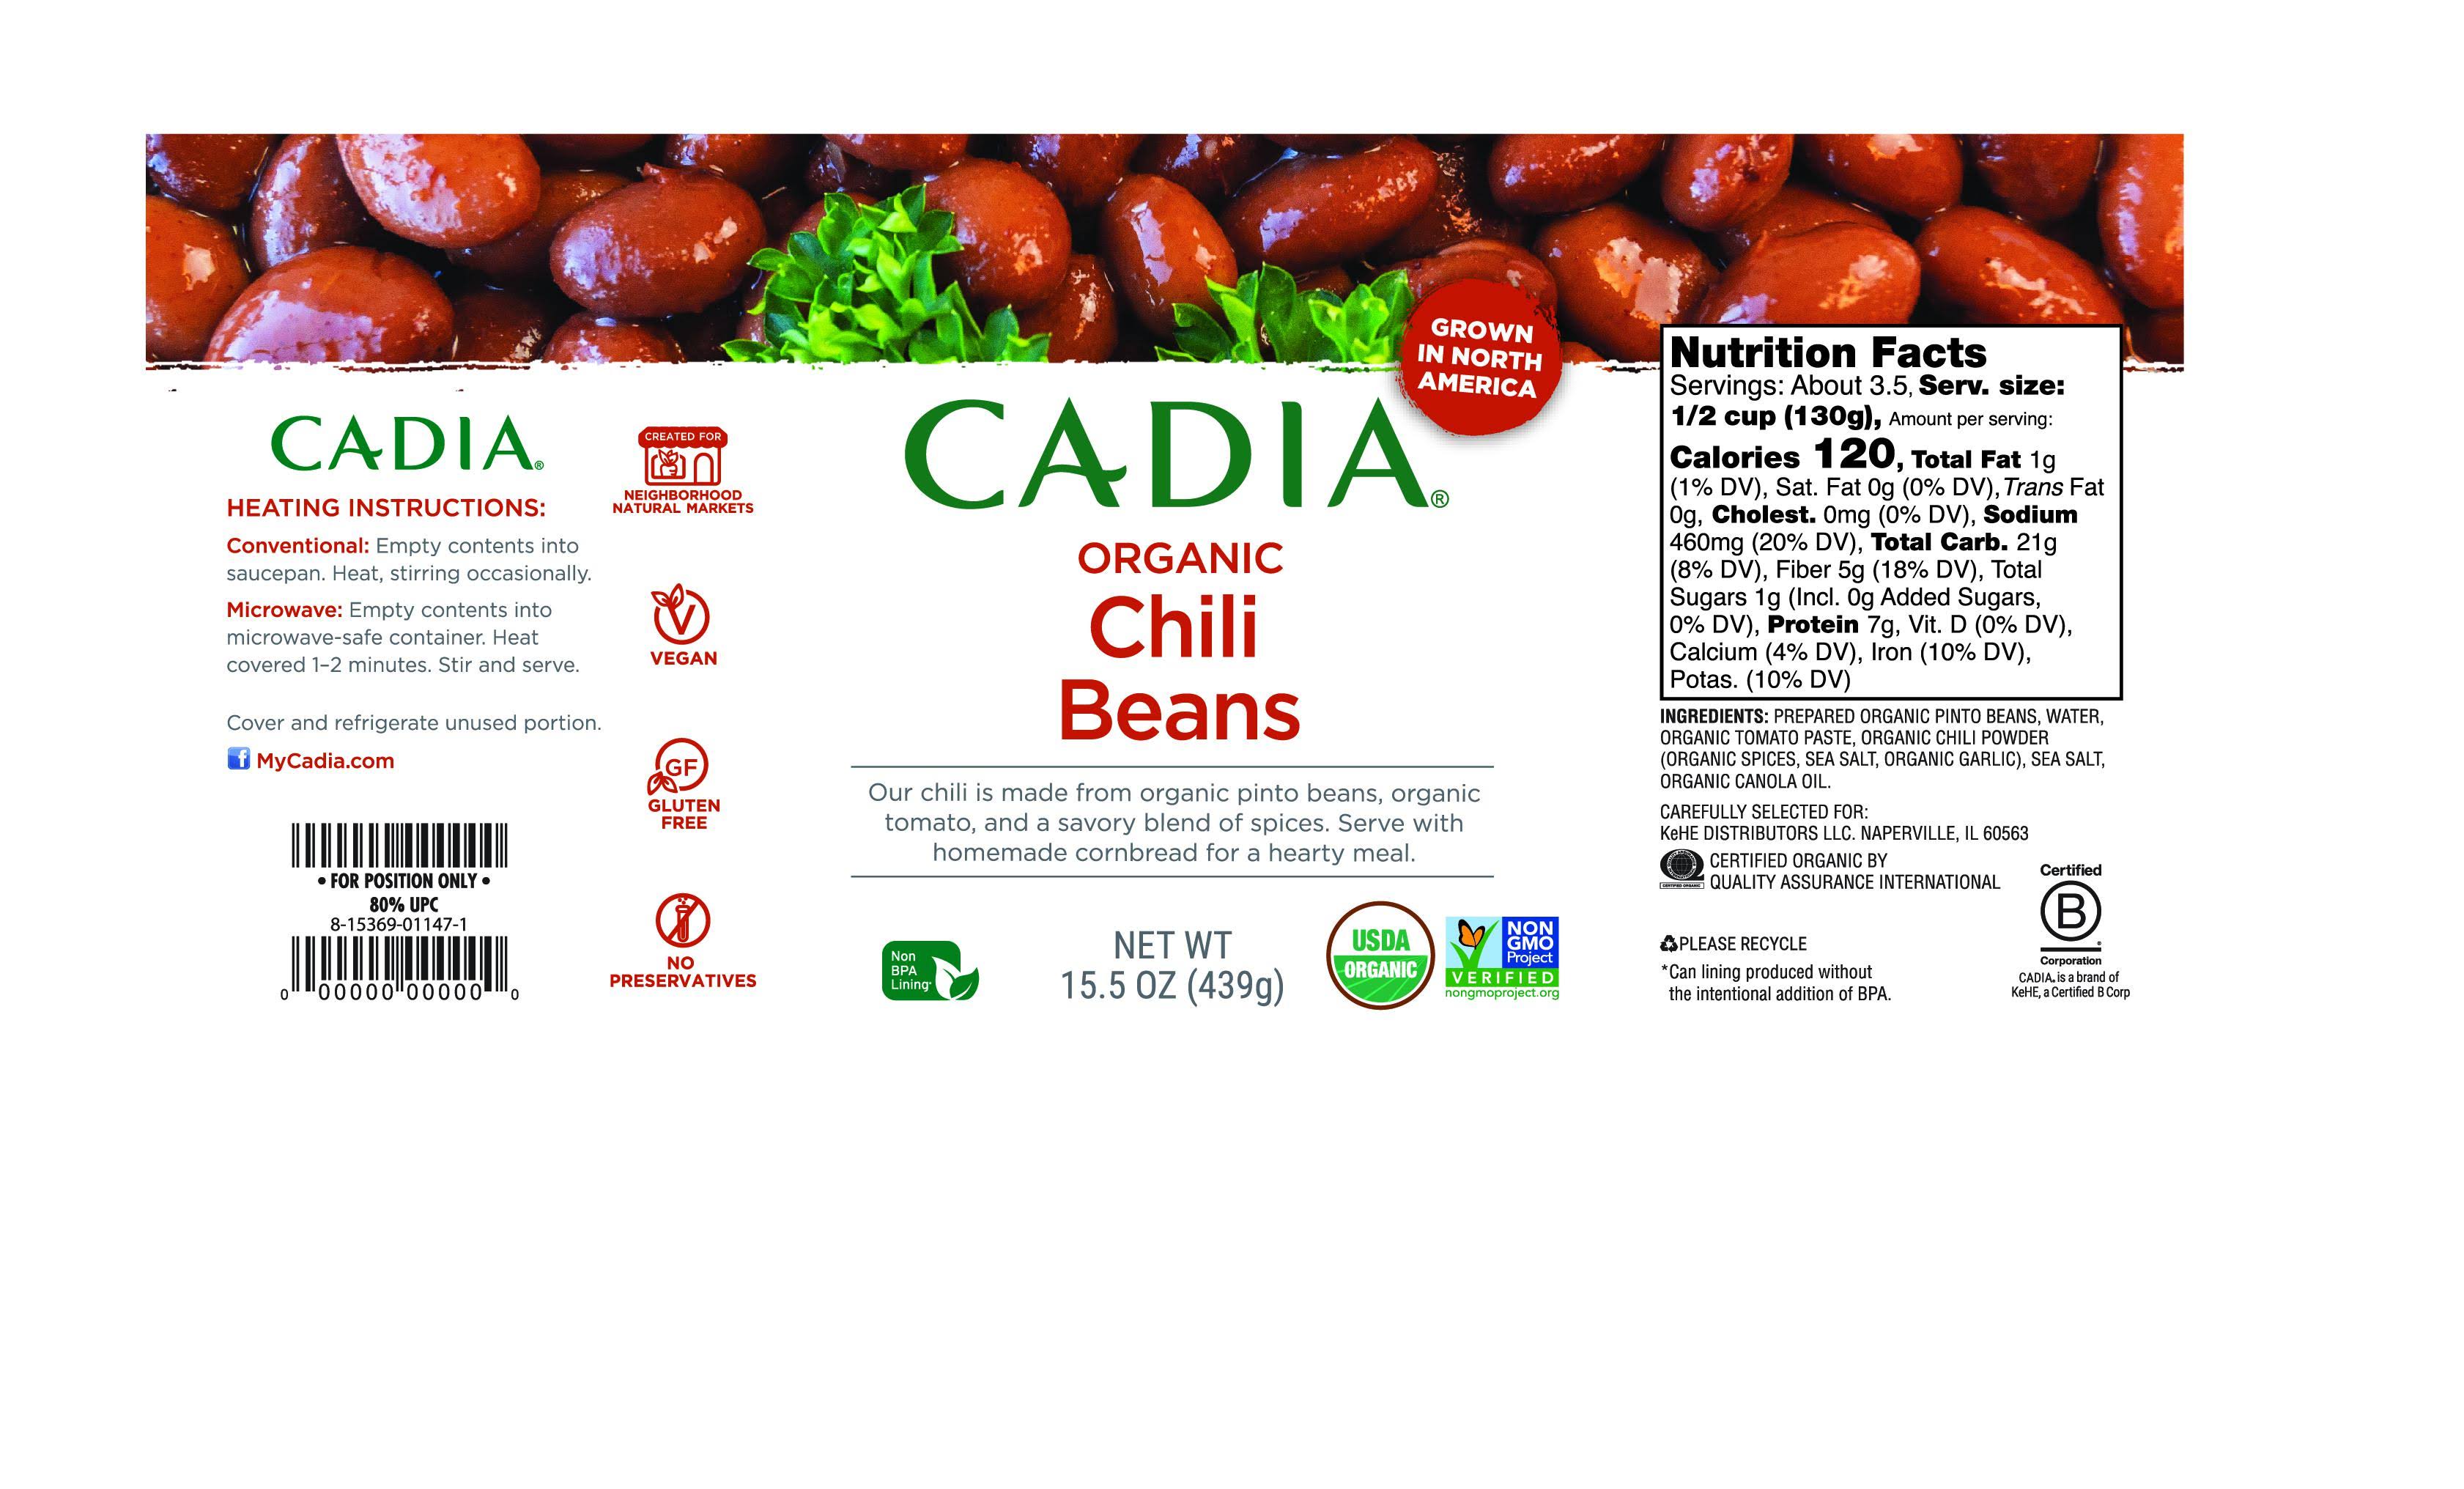 Cadia Chili Beans, Organic - 15.5 oz